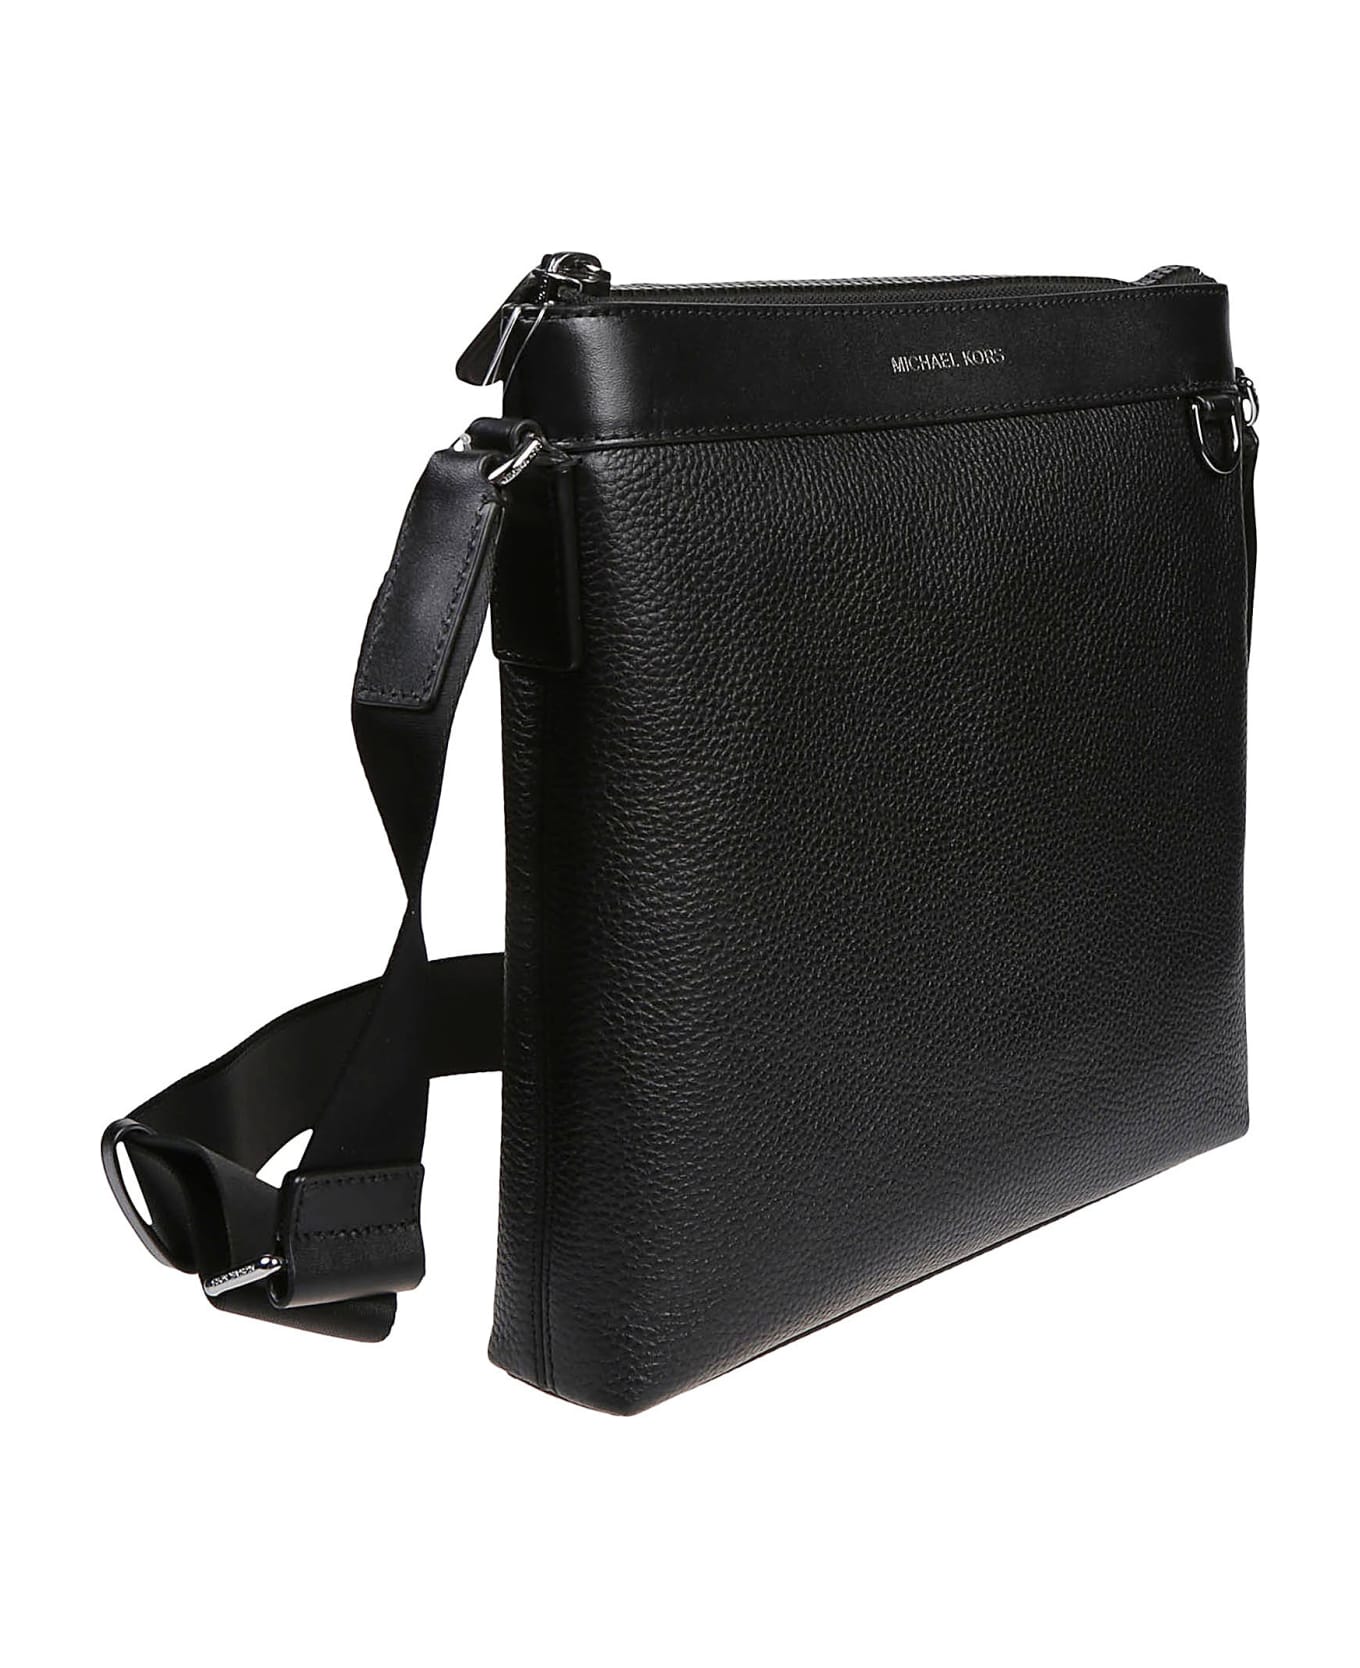 Michael Kors Greyson Messenger Bag - Black